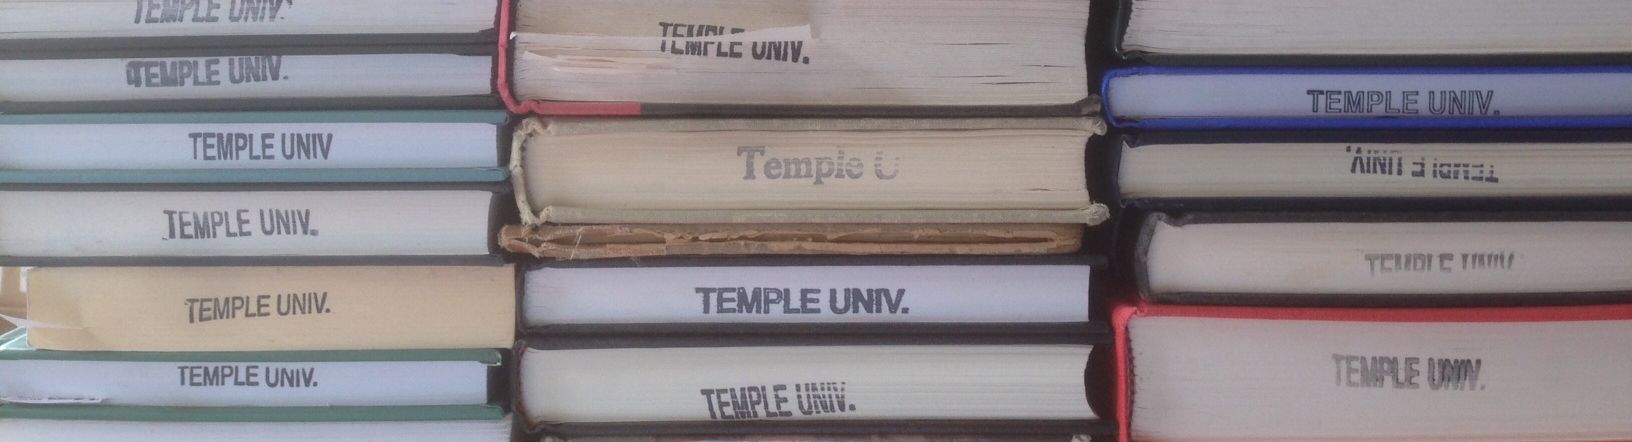 temple university mfa creative writing